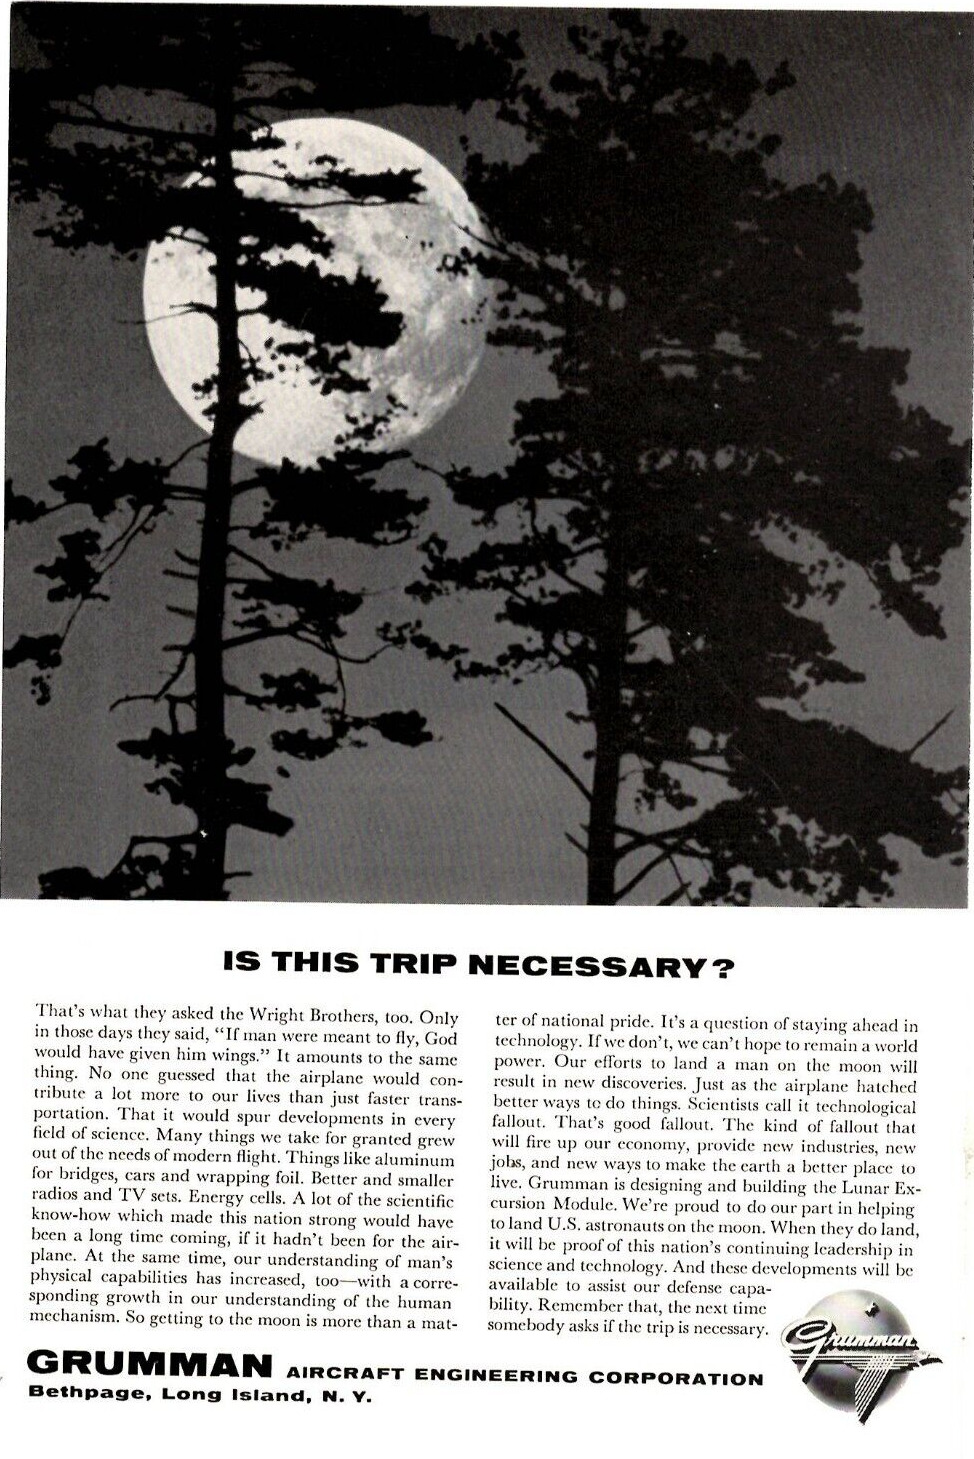 1964 Print Ad Grumman Aircraft Corp Is this Trip Necessary?Moon Landing Wright